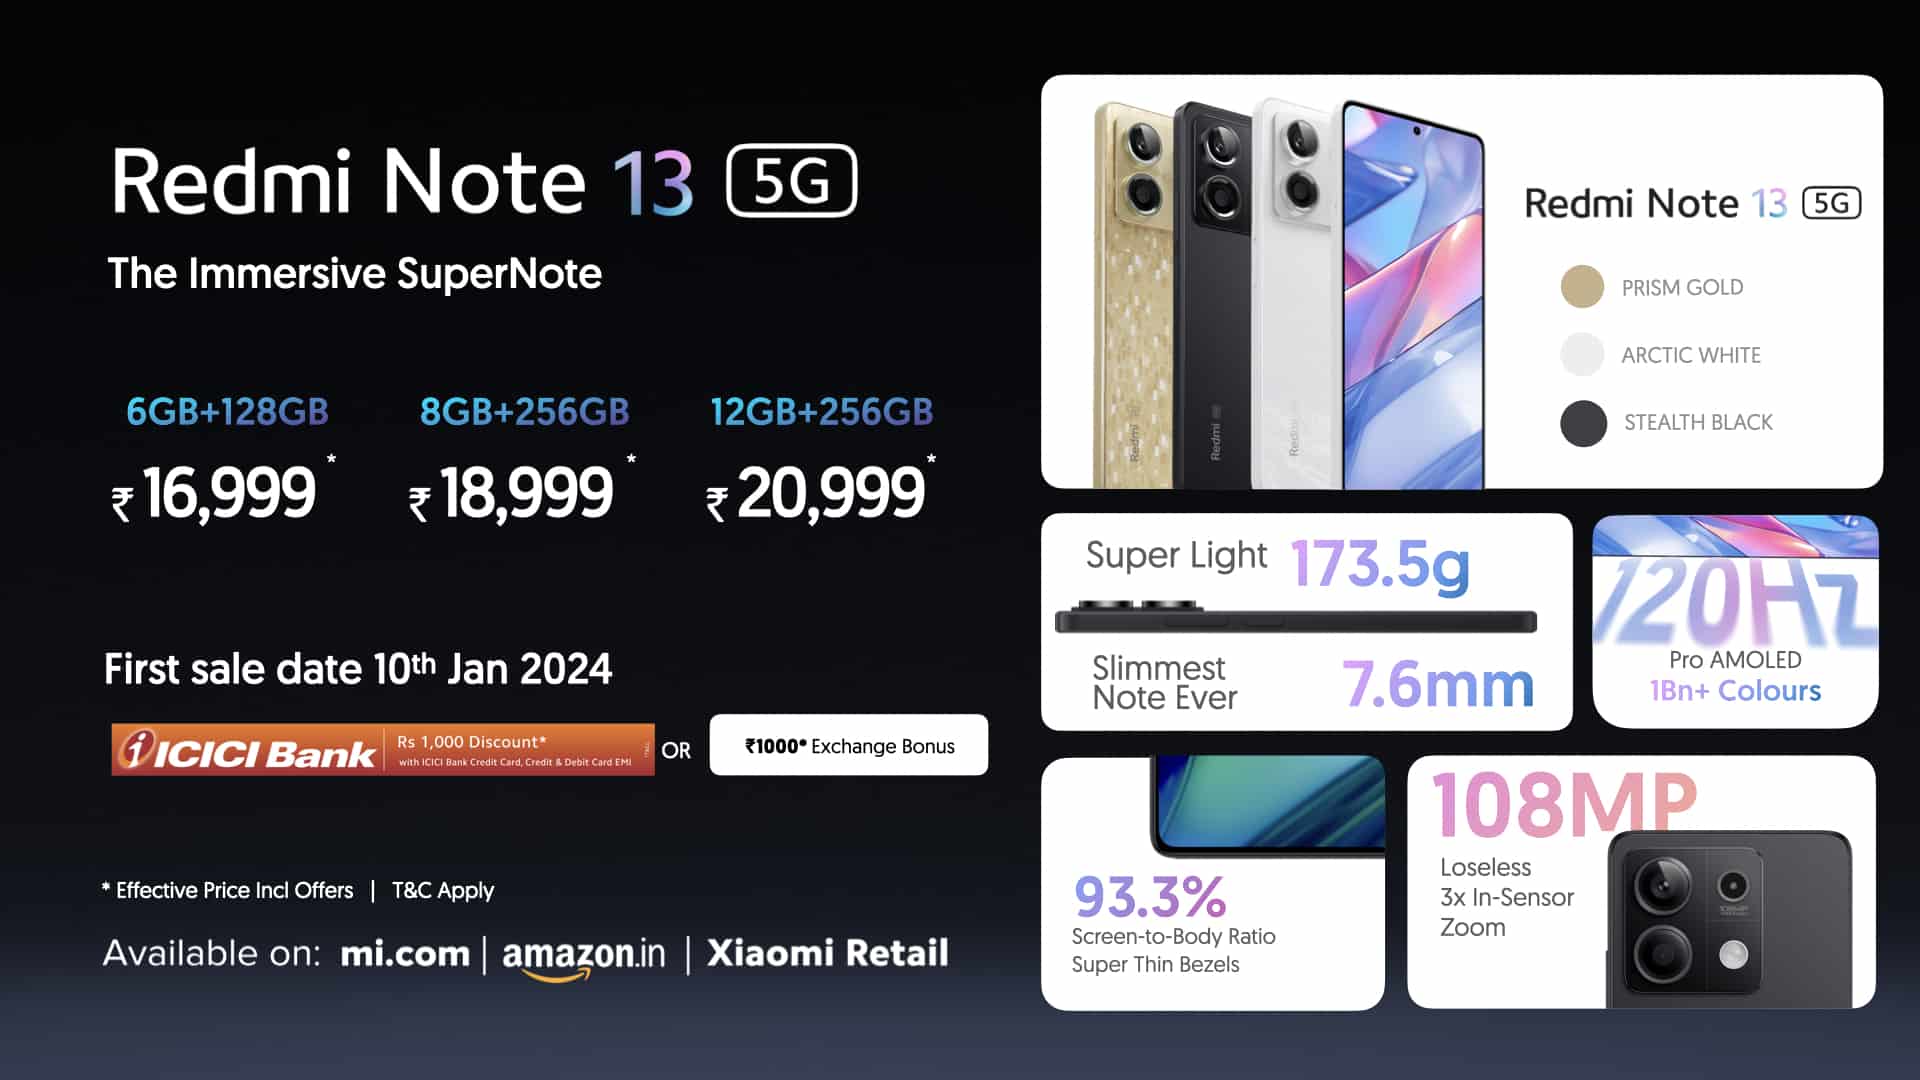 Redmi Note 13 5G - Key Specs